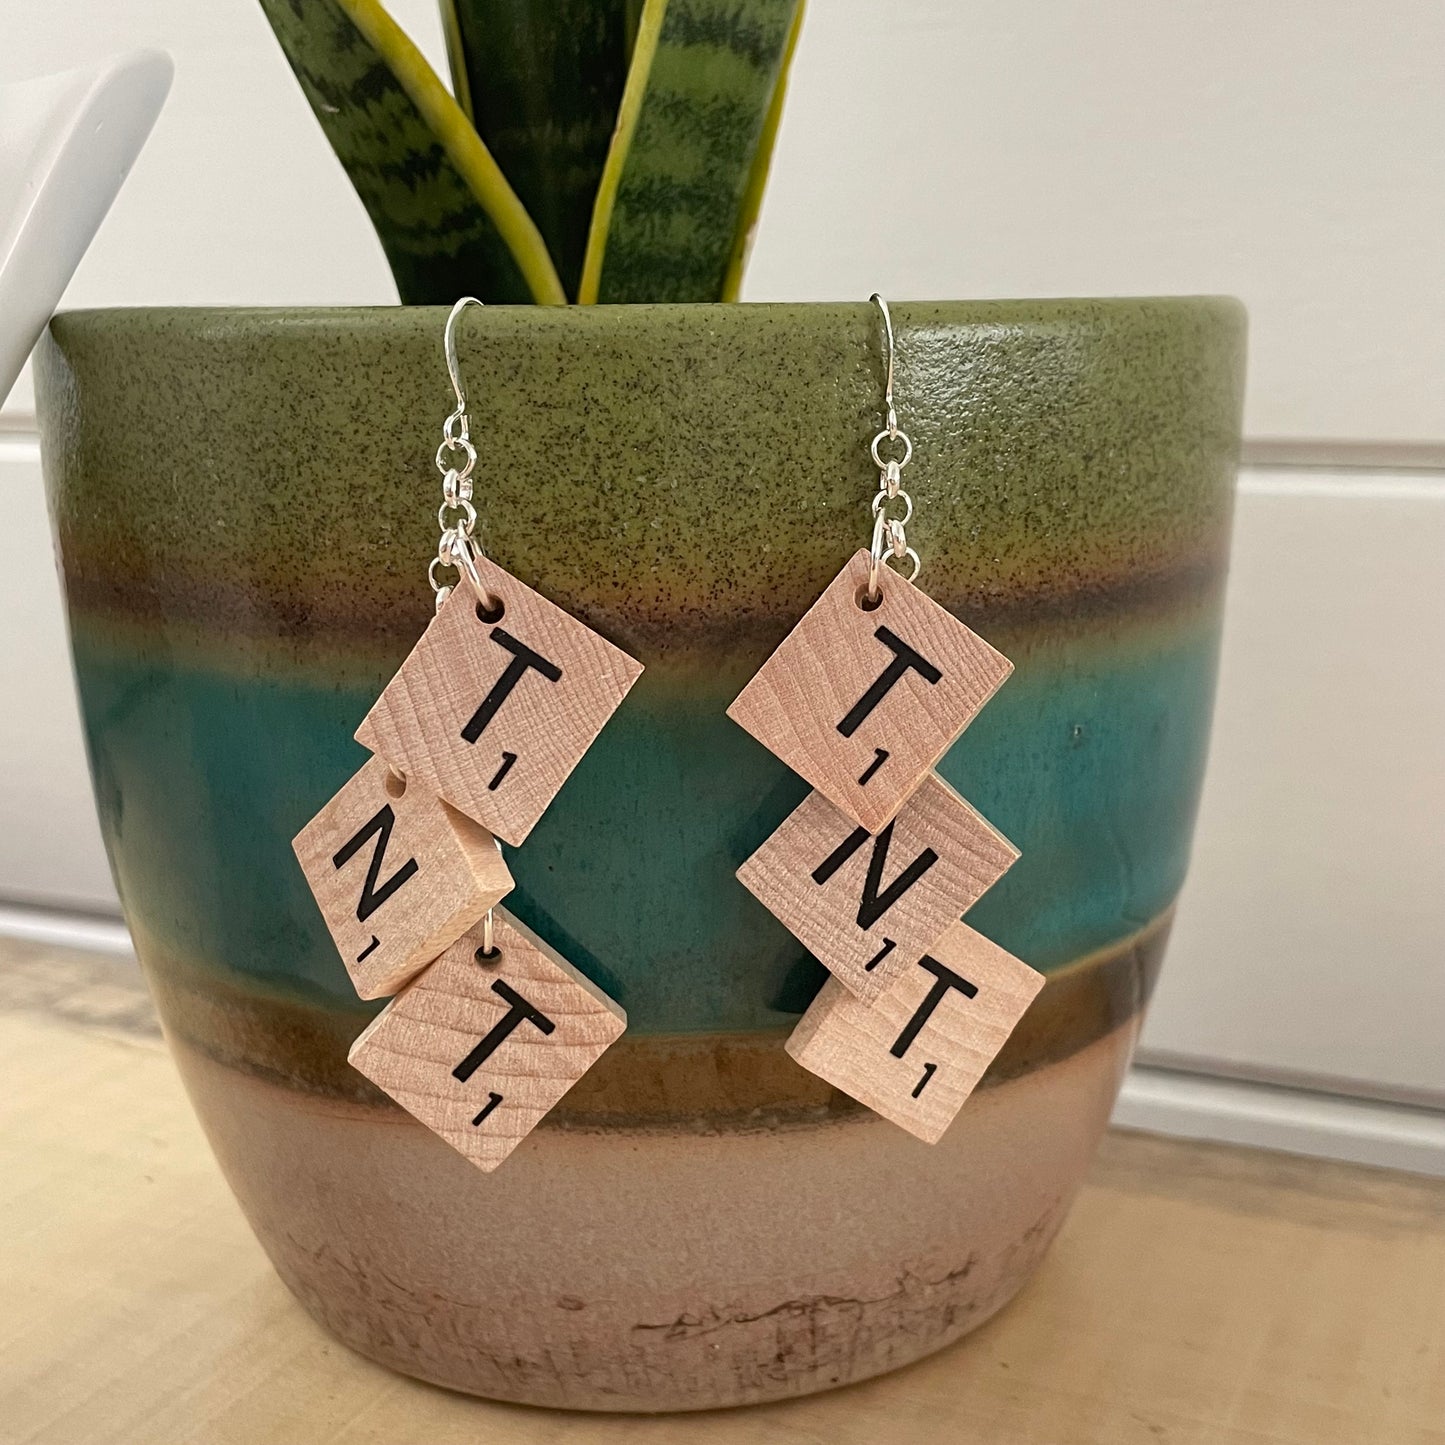 TNT Statement Dangle Earrings 3.25" Scrabble Tile Tan Wood Repurposed Upcycled Fun Game OOAK